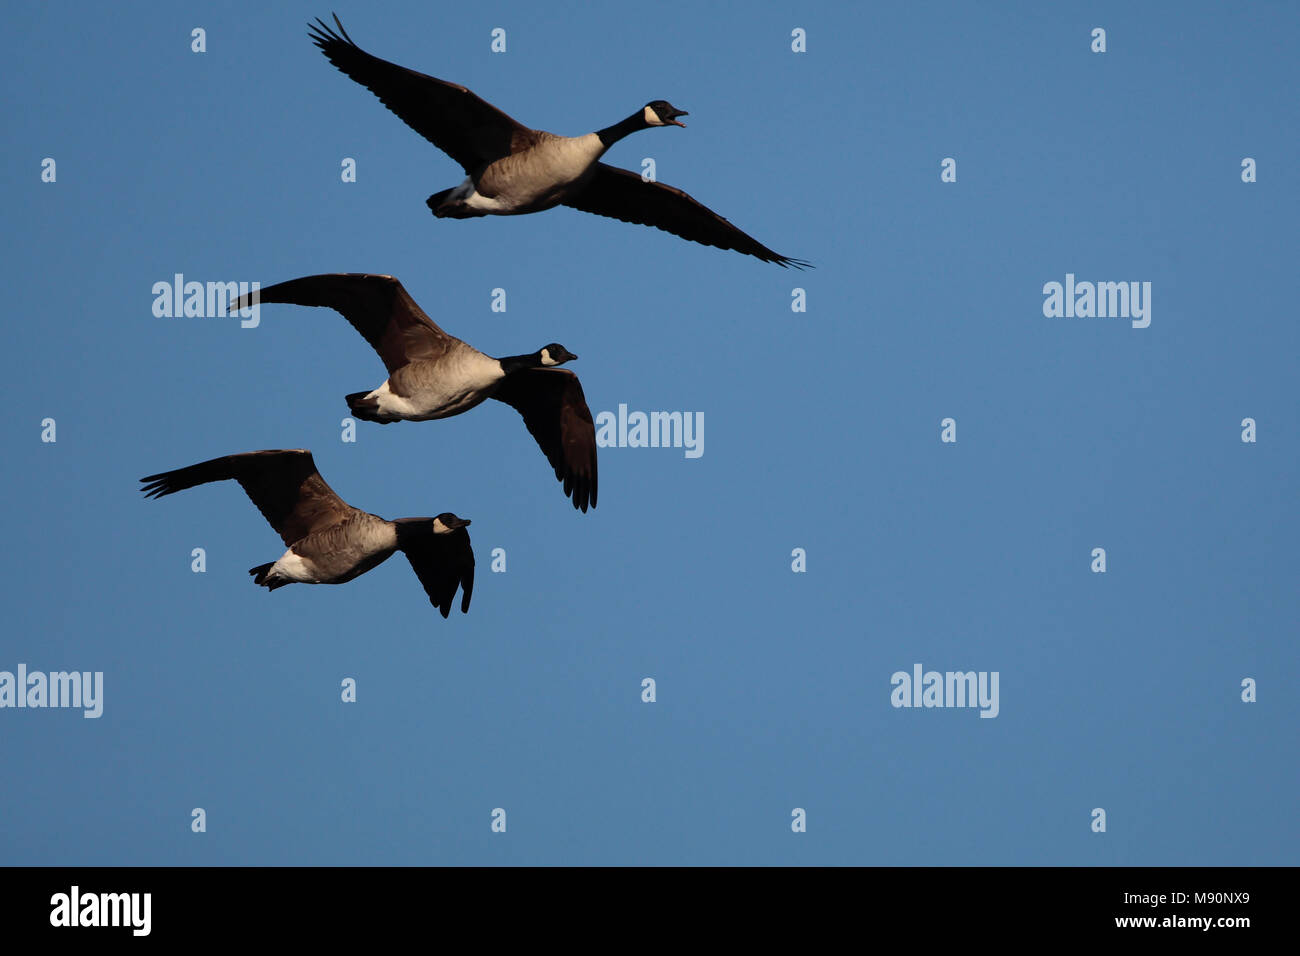 Canadese gans drie vogels in vlucht Nederland, Greater Canada Goose three  birds in flight Netherlands Stock Photo - Alamy